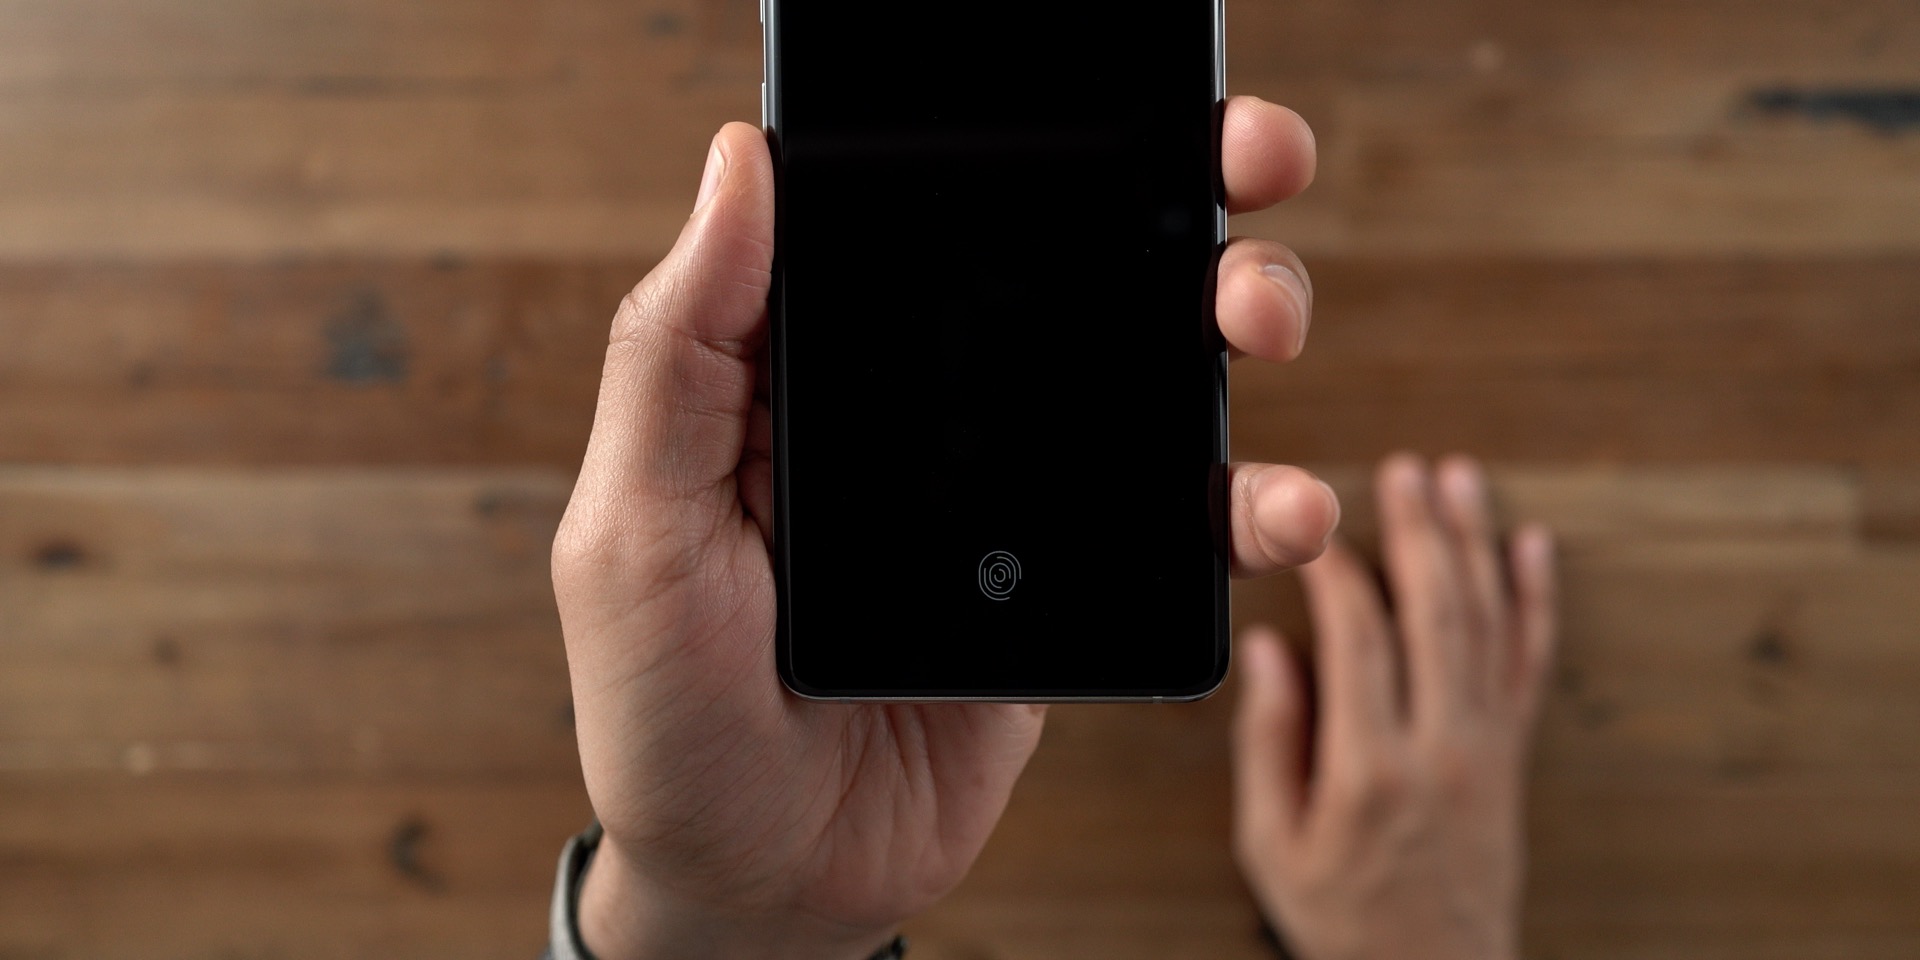 Galaxy S10+ vs iPhone In-Display fingerprint sensor